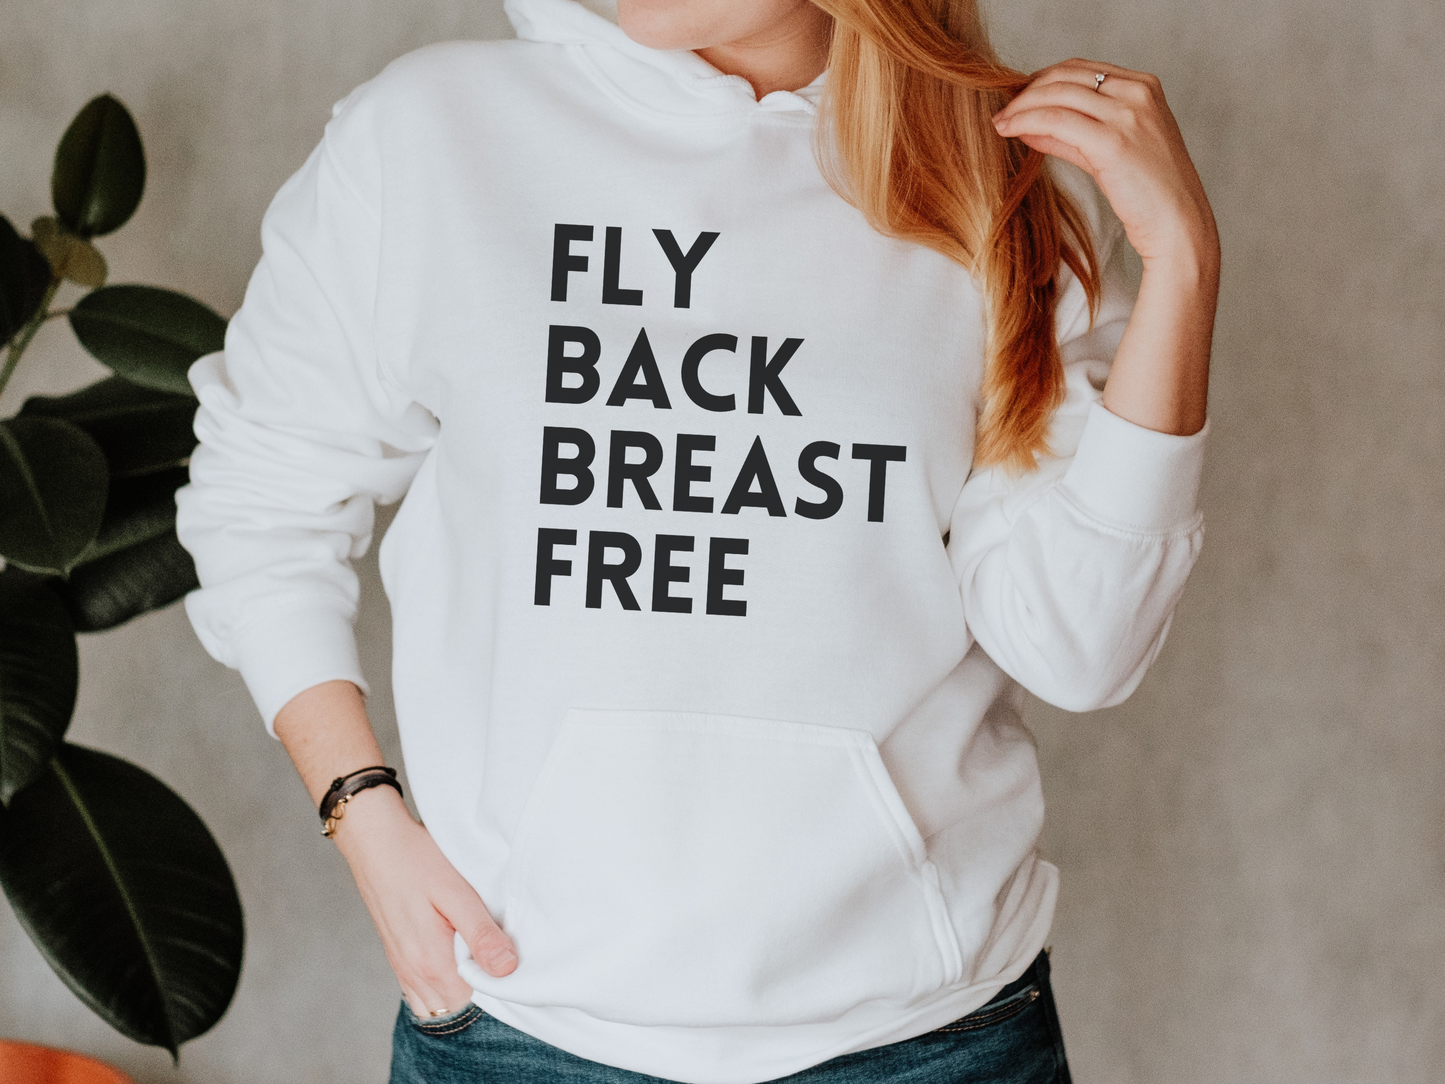 Fly Back Breast Free Adult Unisex Hoodie